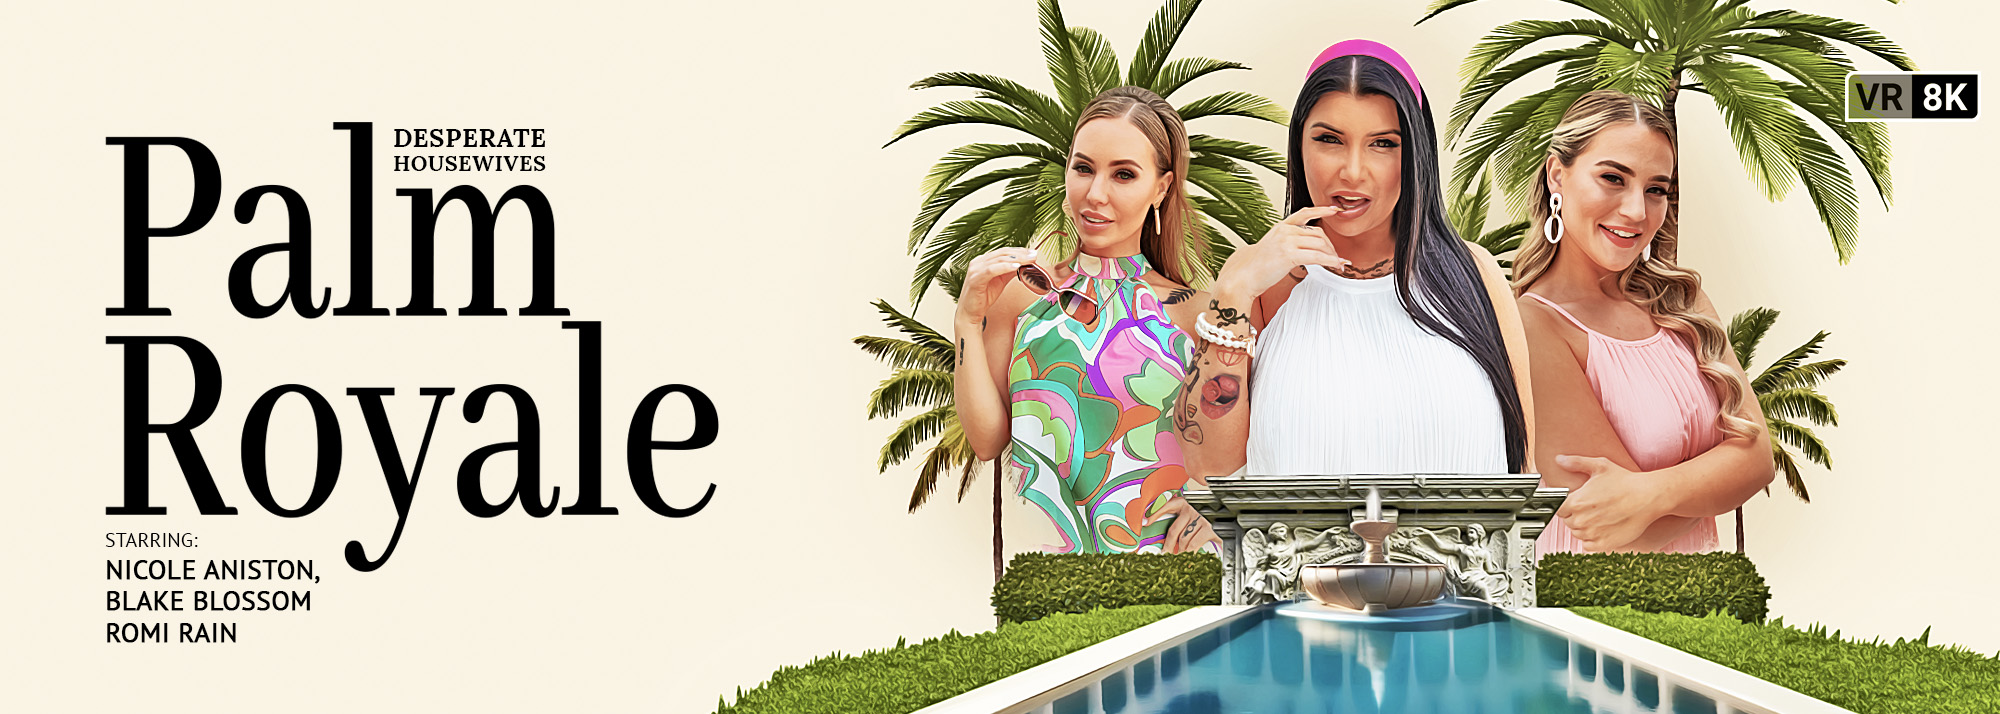 Desperate Housewives: Palm Royale - VR Porn Video, Starring: Blake Blossom, Romi Rain, Nicole Aniston